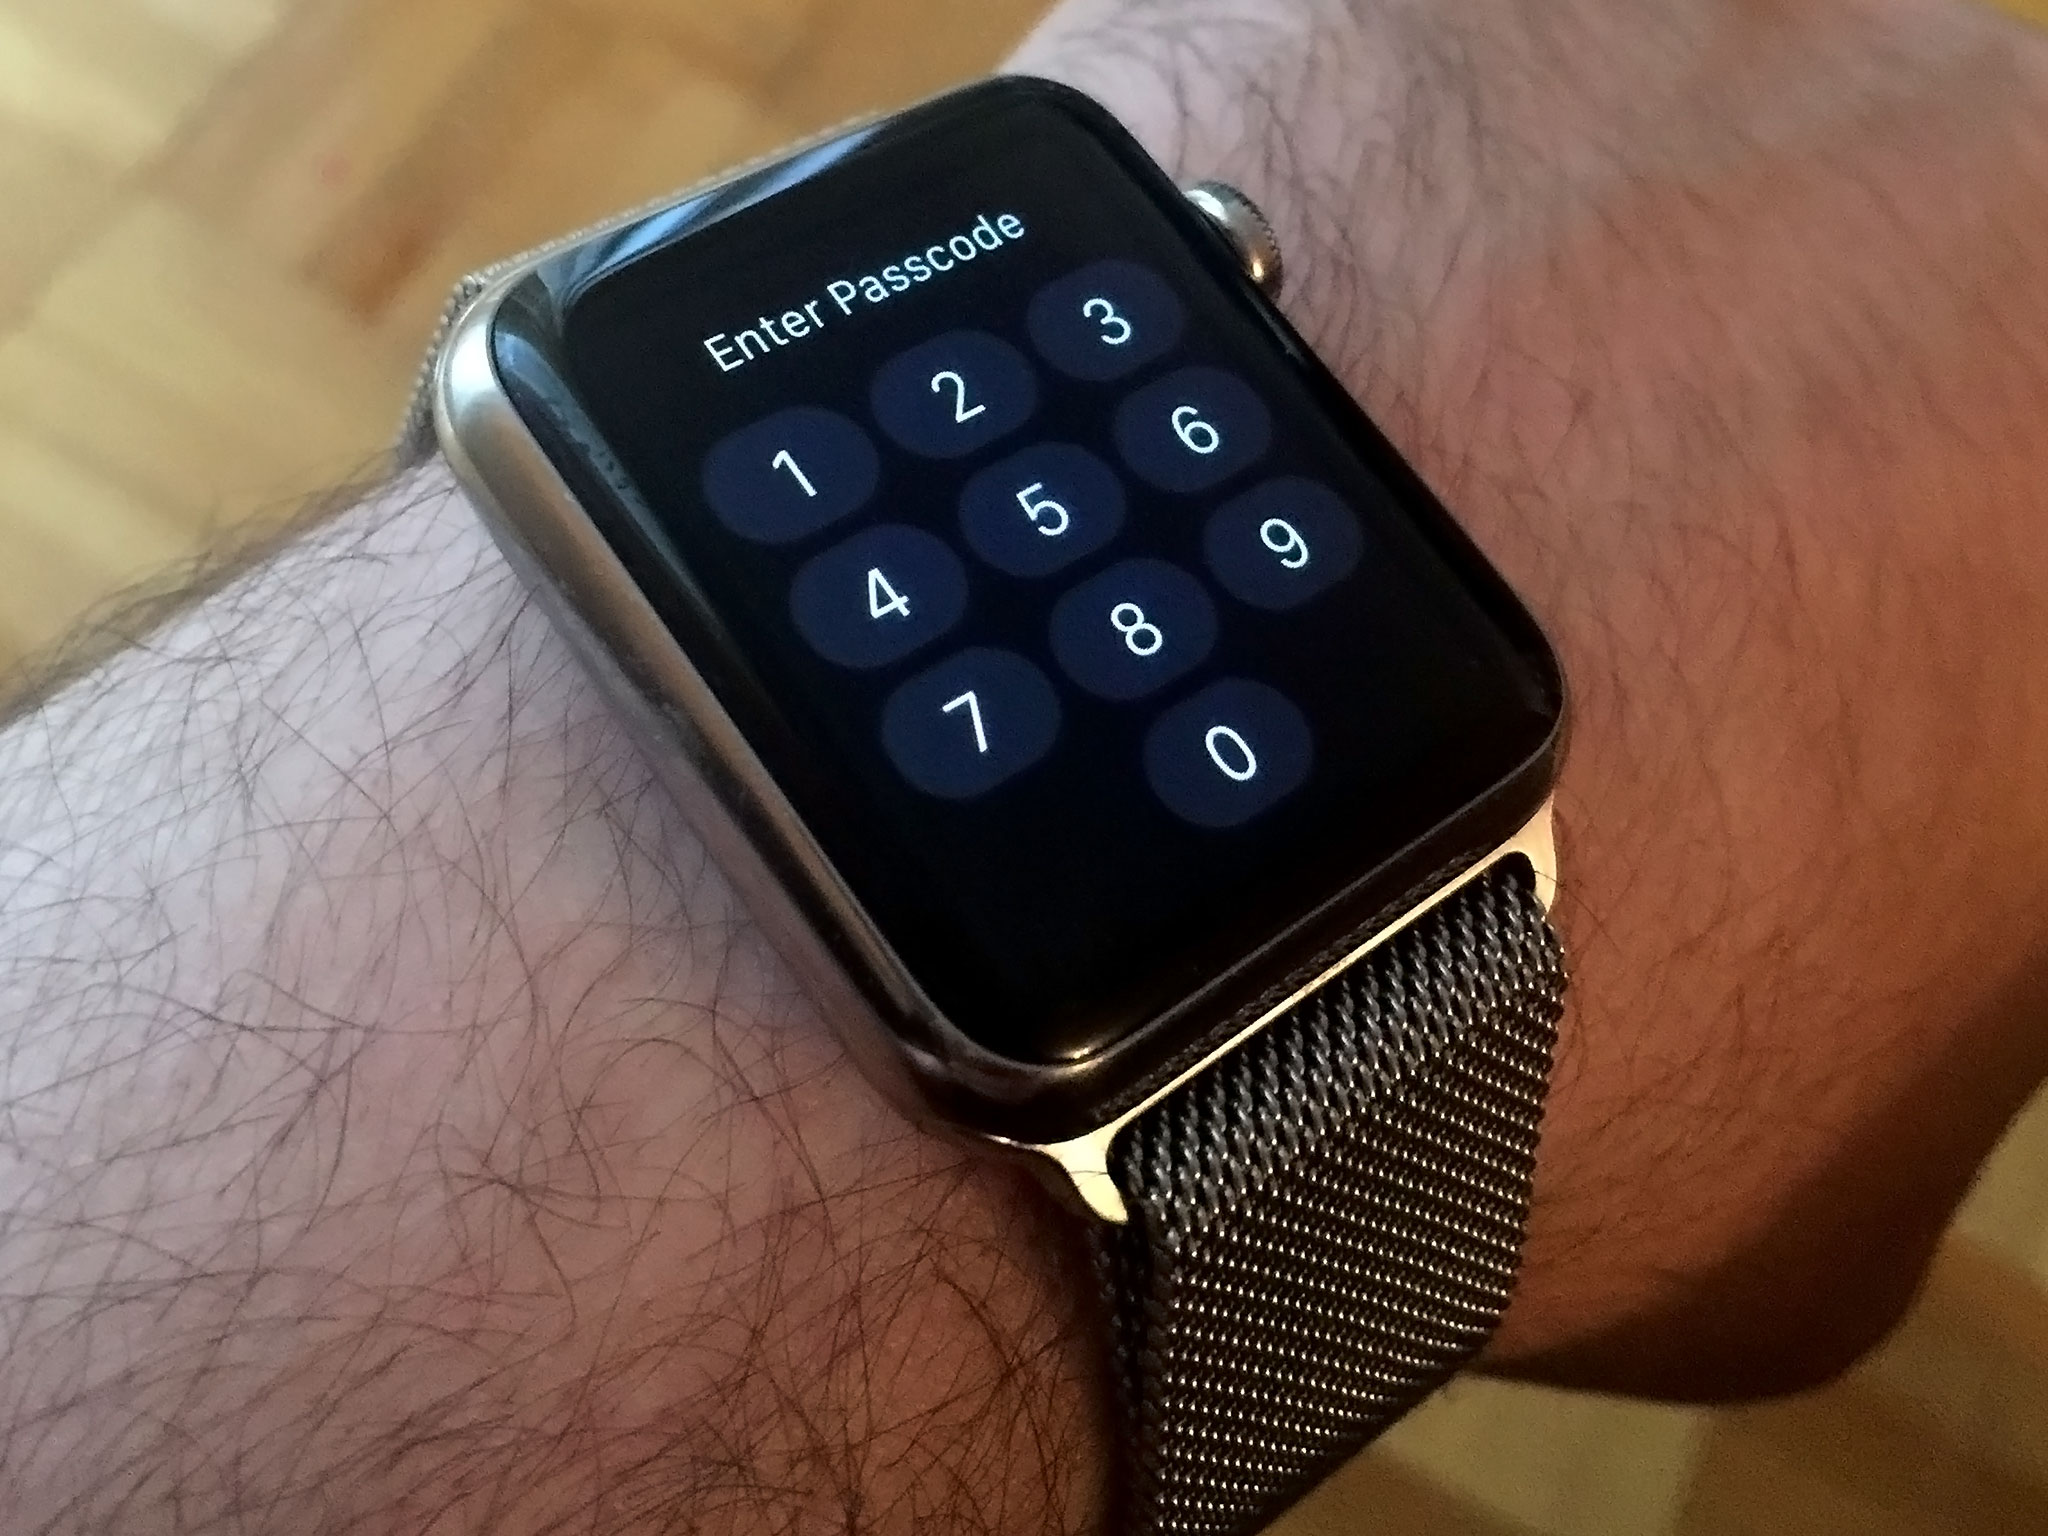 Regarding Apple Watch an Activation Lock